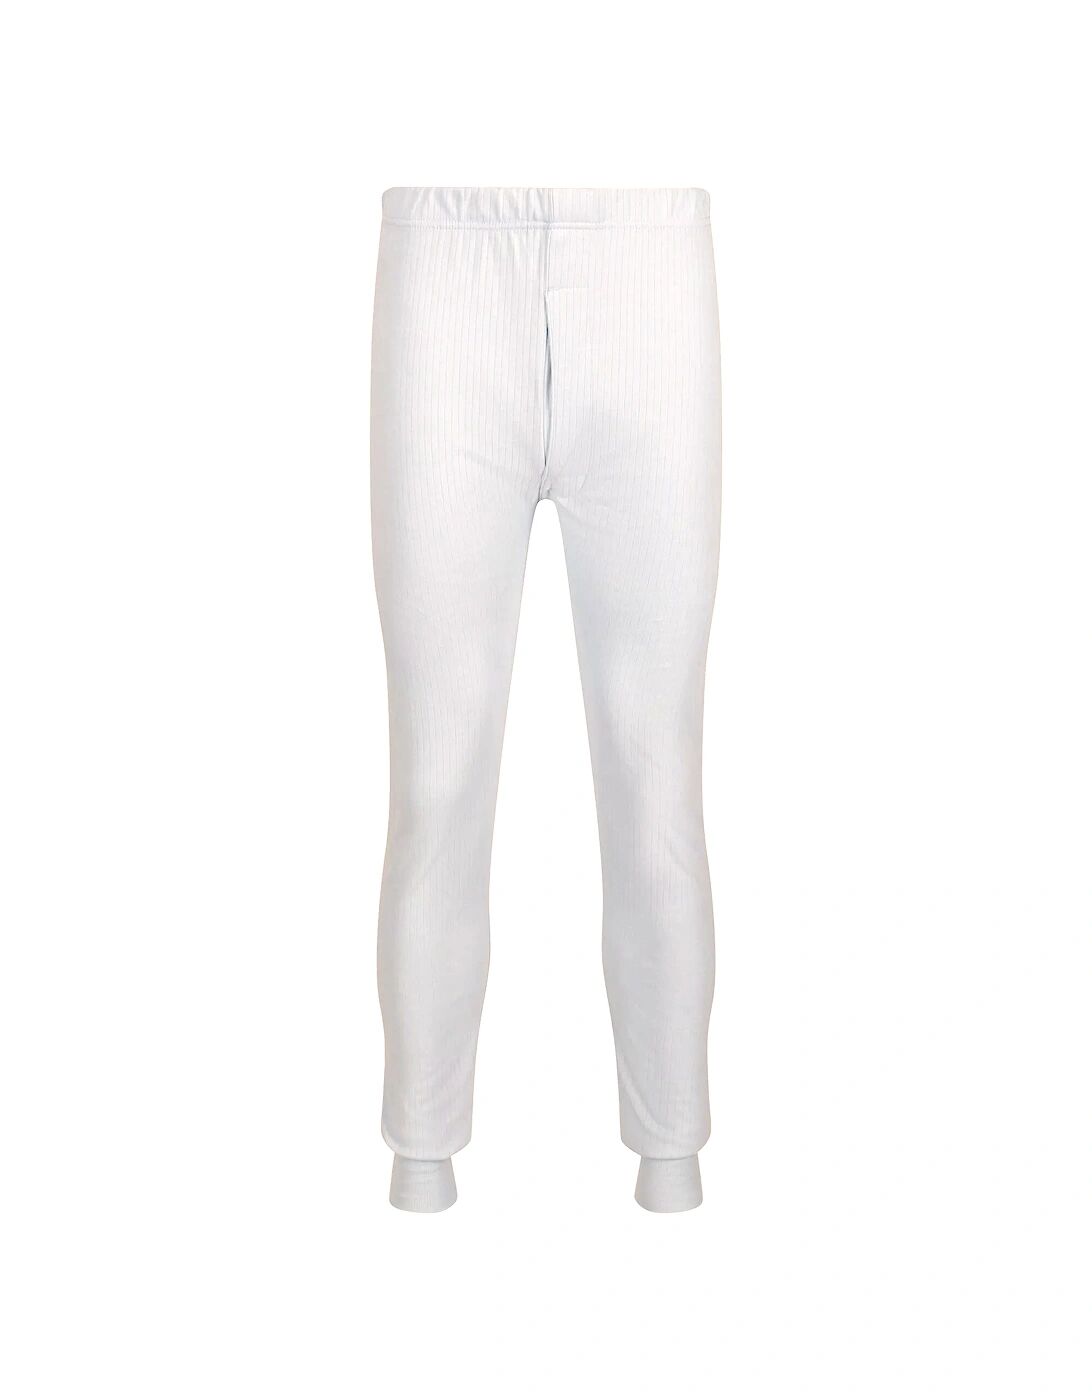 Men's Regatta Mens Thermal Underwear Long Johns - White - Size: 14/13.5/15.5/14.5/16/15